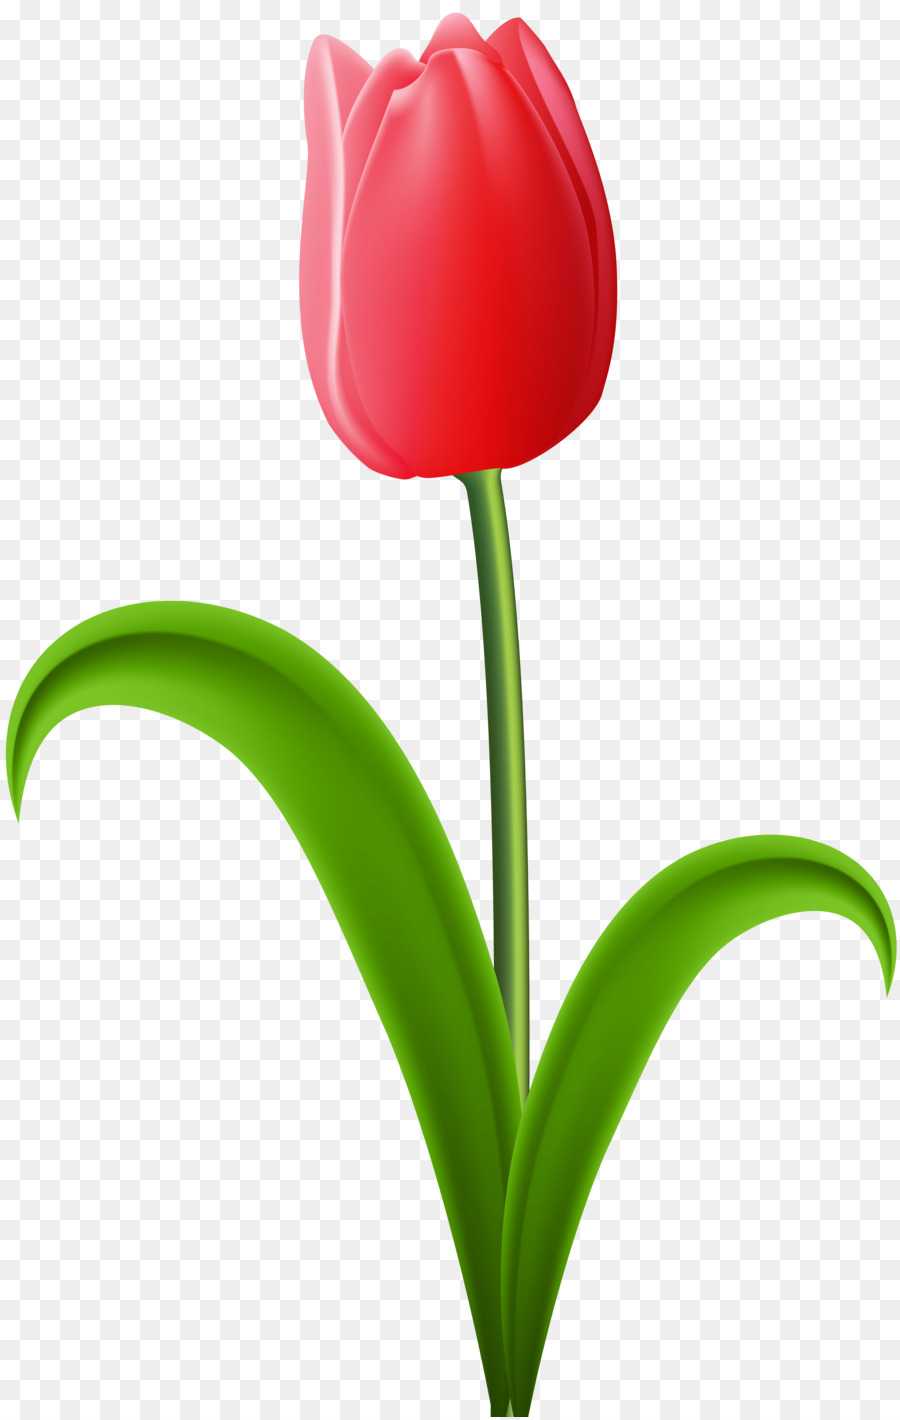 Картинка букет тюльпанов на прозрачном фоне